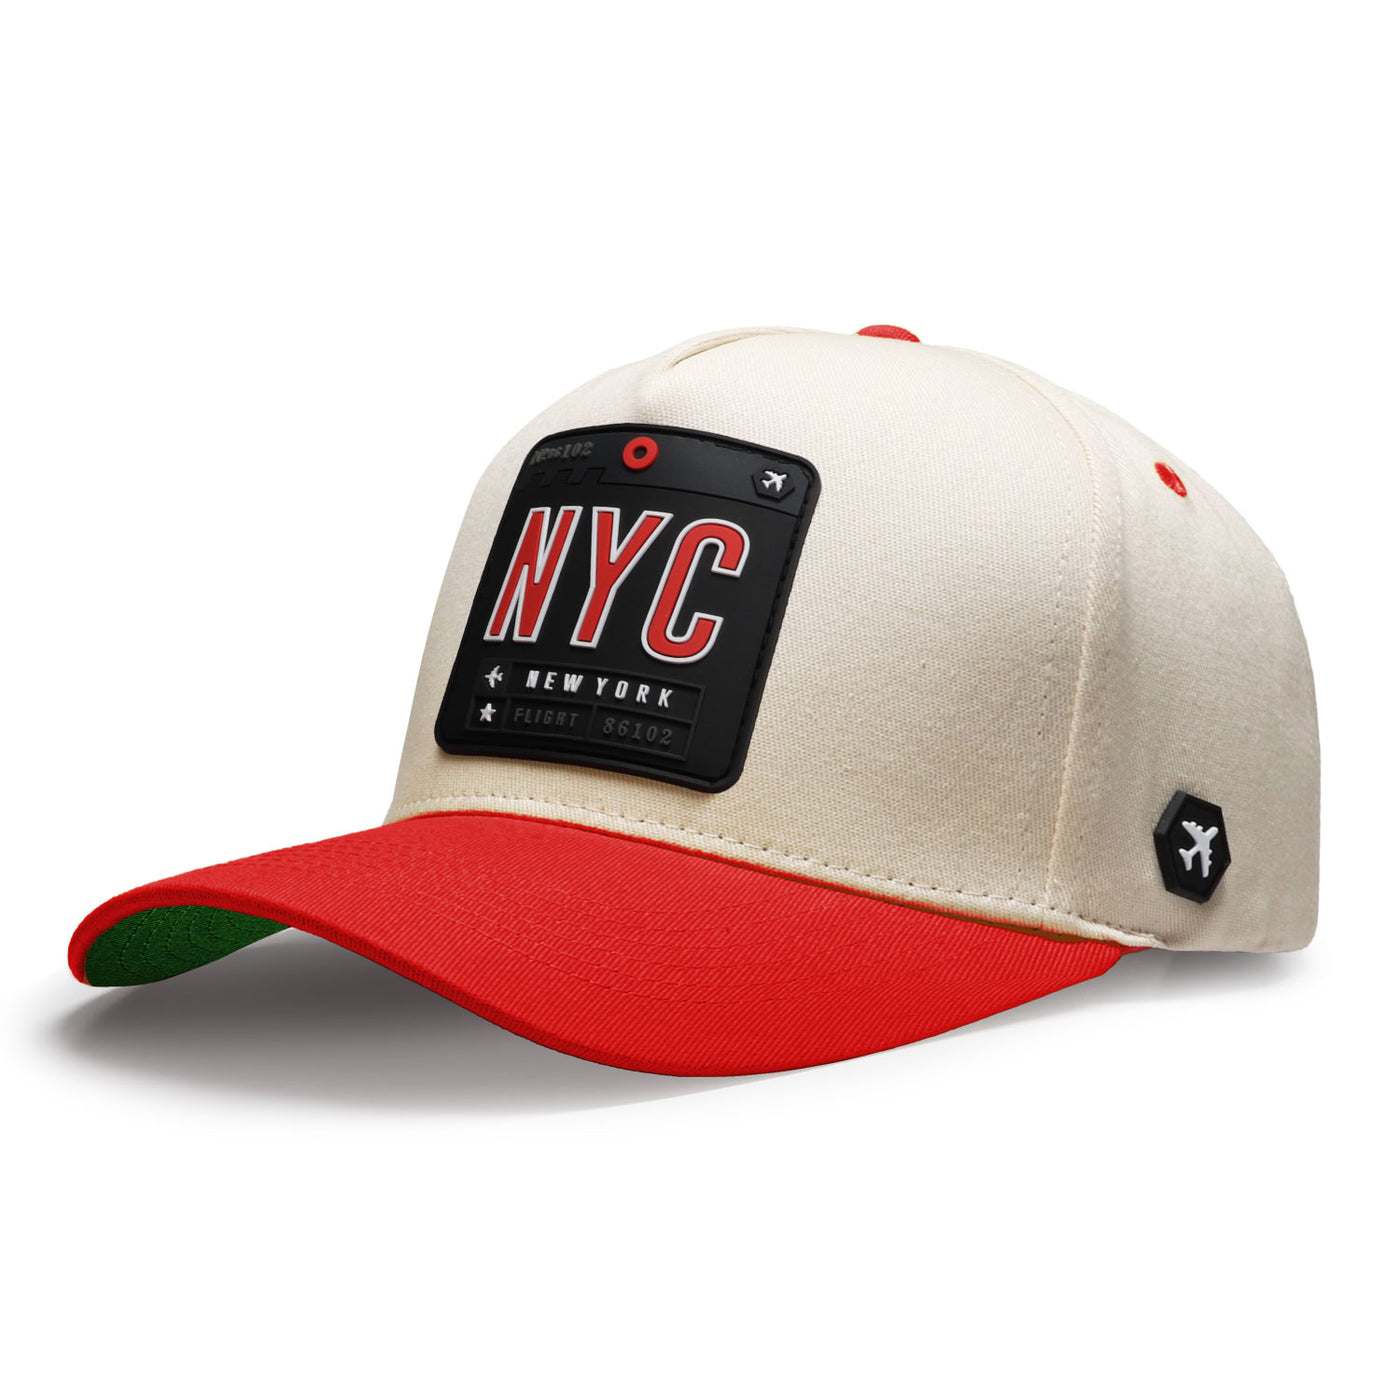 New York Classic Cap - Natural/Red